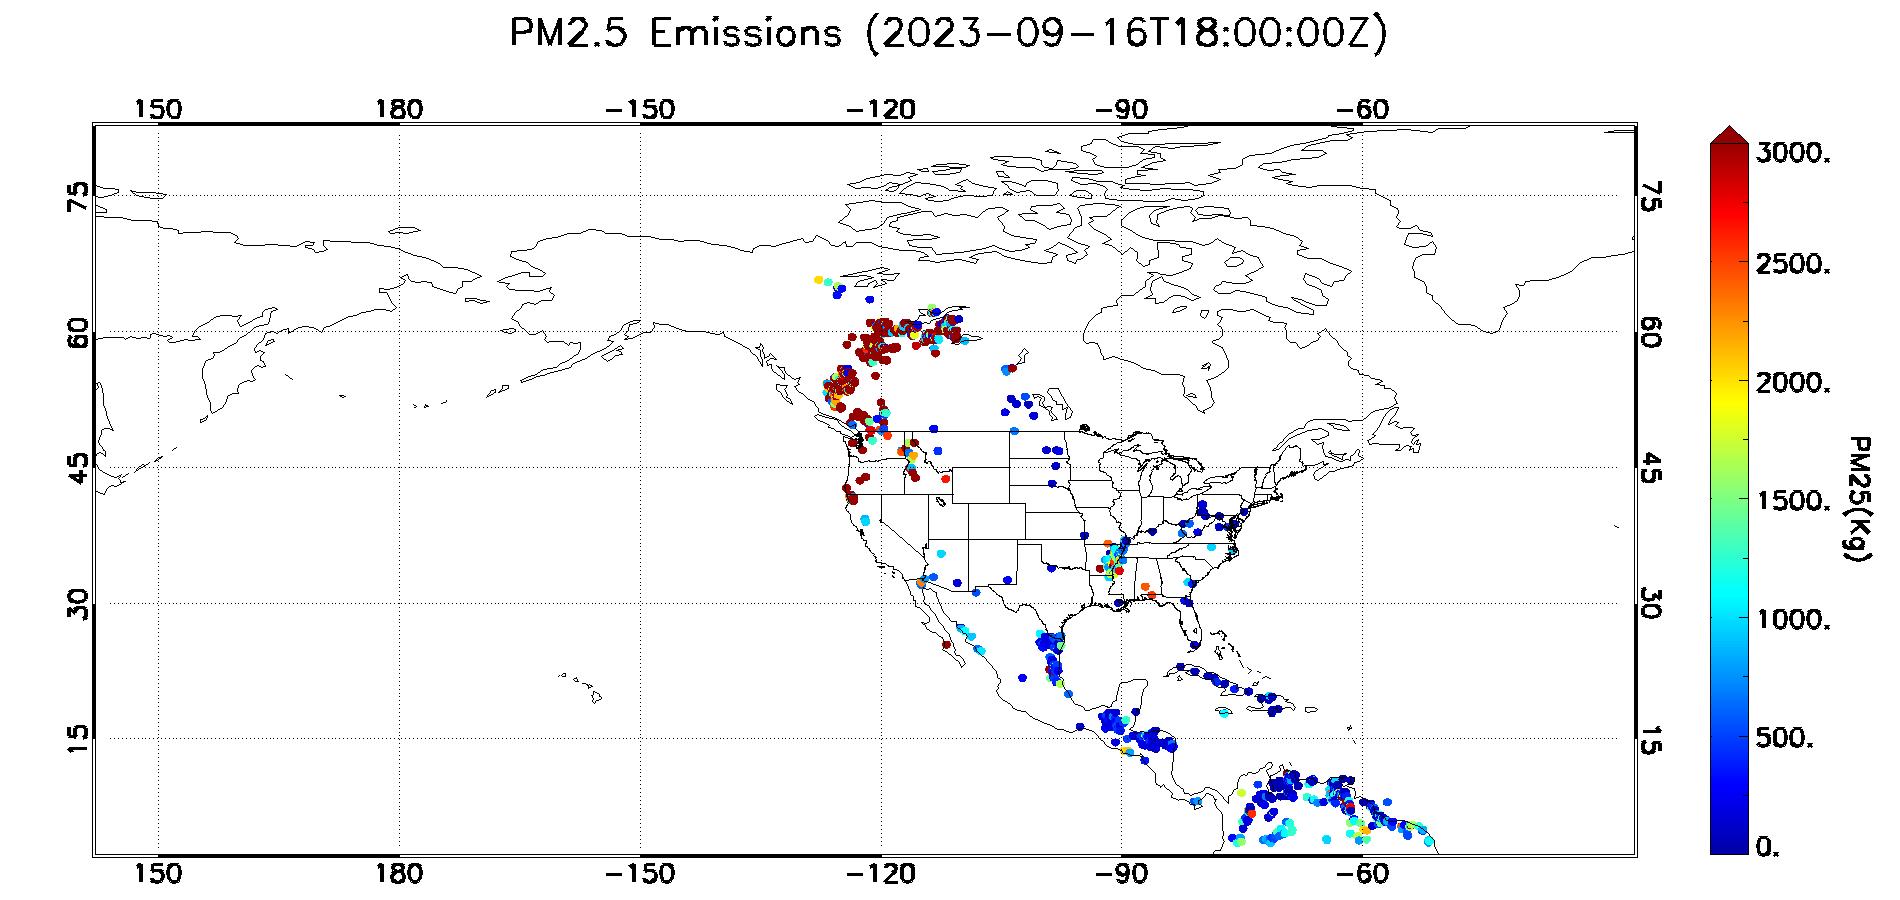 PM2.5 Emissions (2023-09-1618:00:00Z).